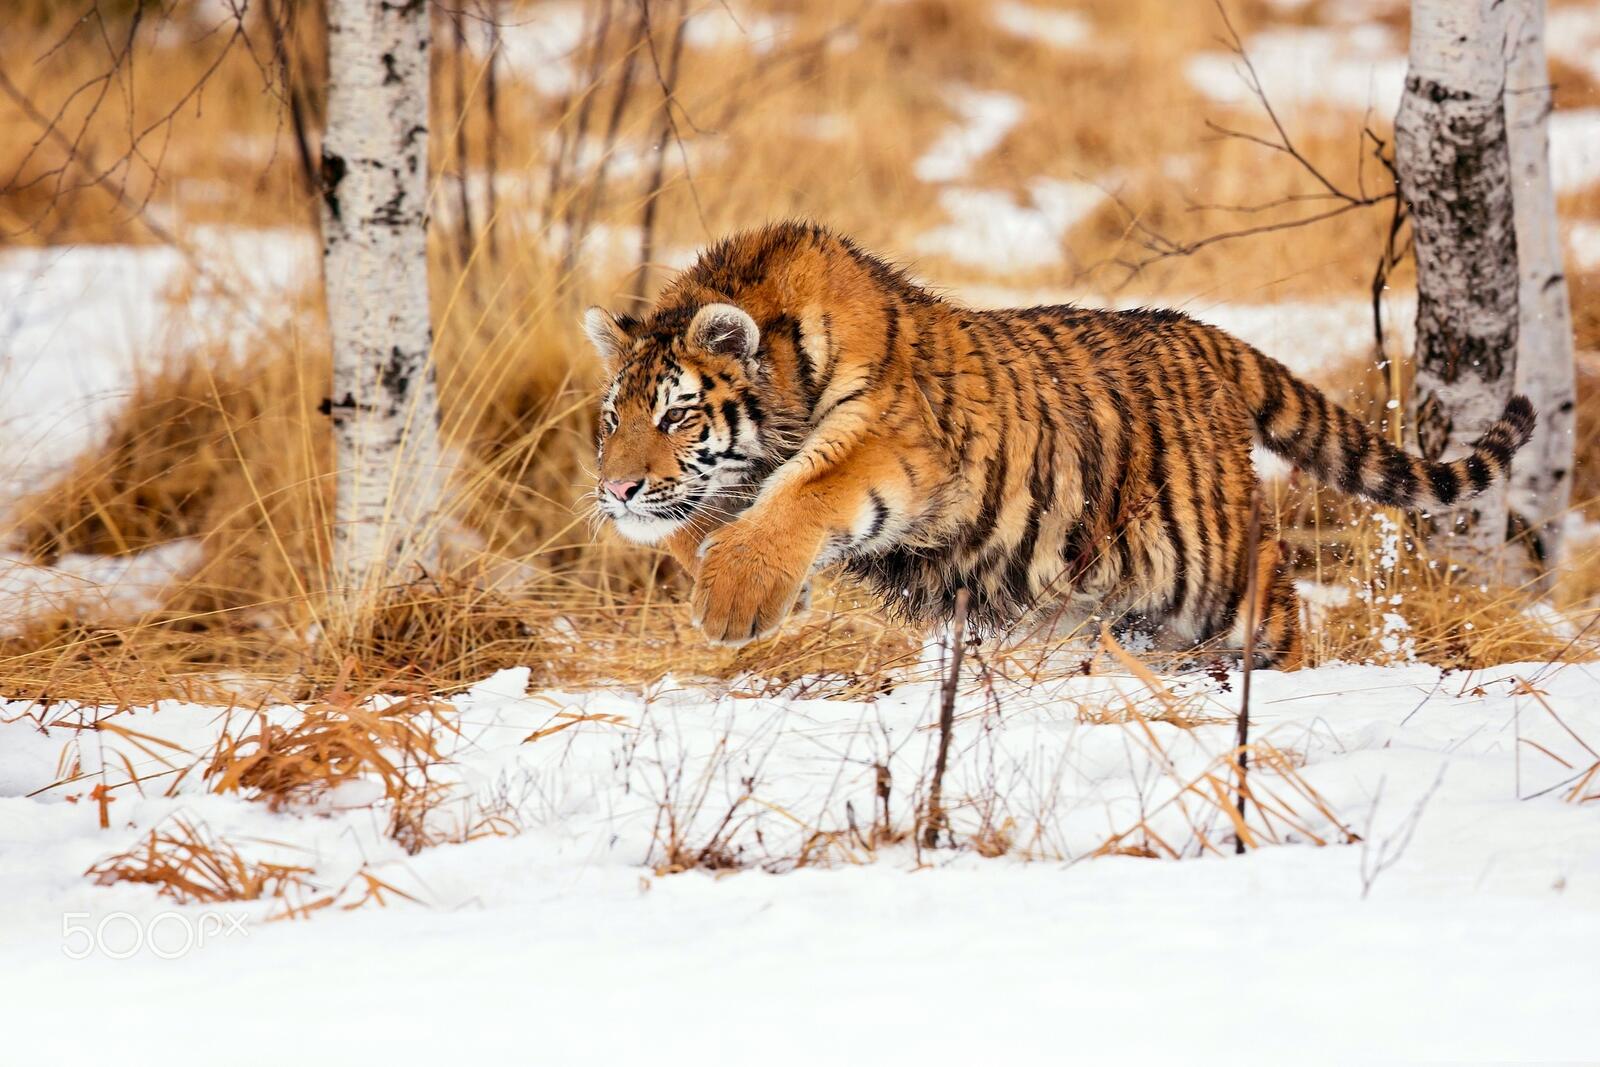 Wallpapers tiger running snow on the desktop